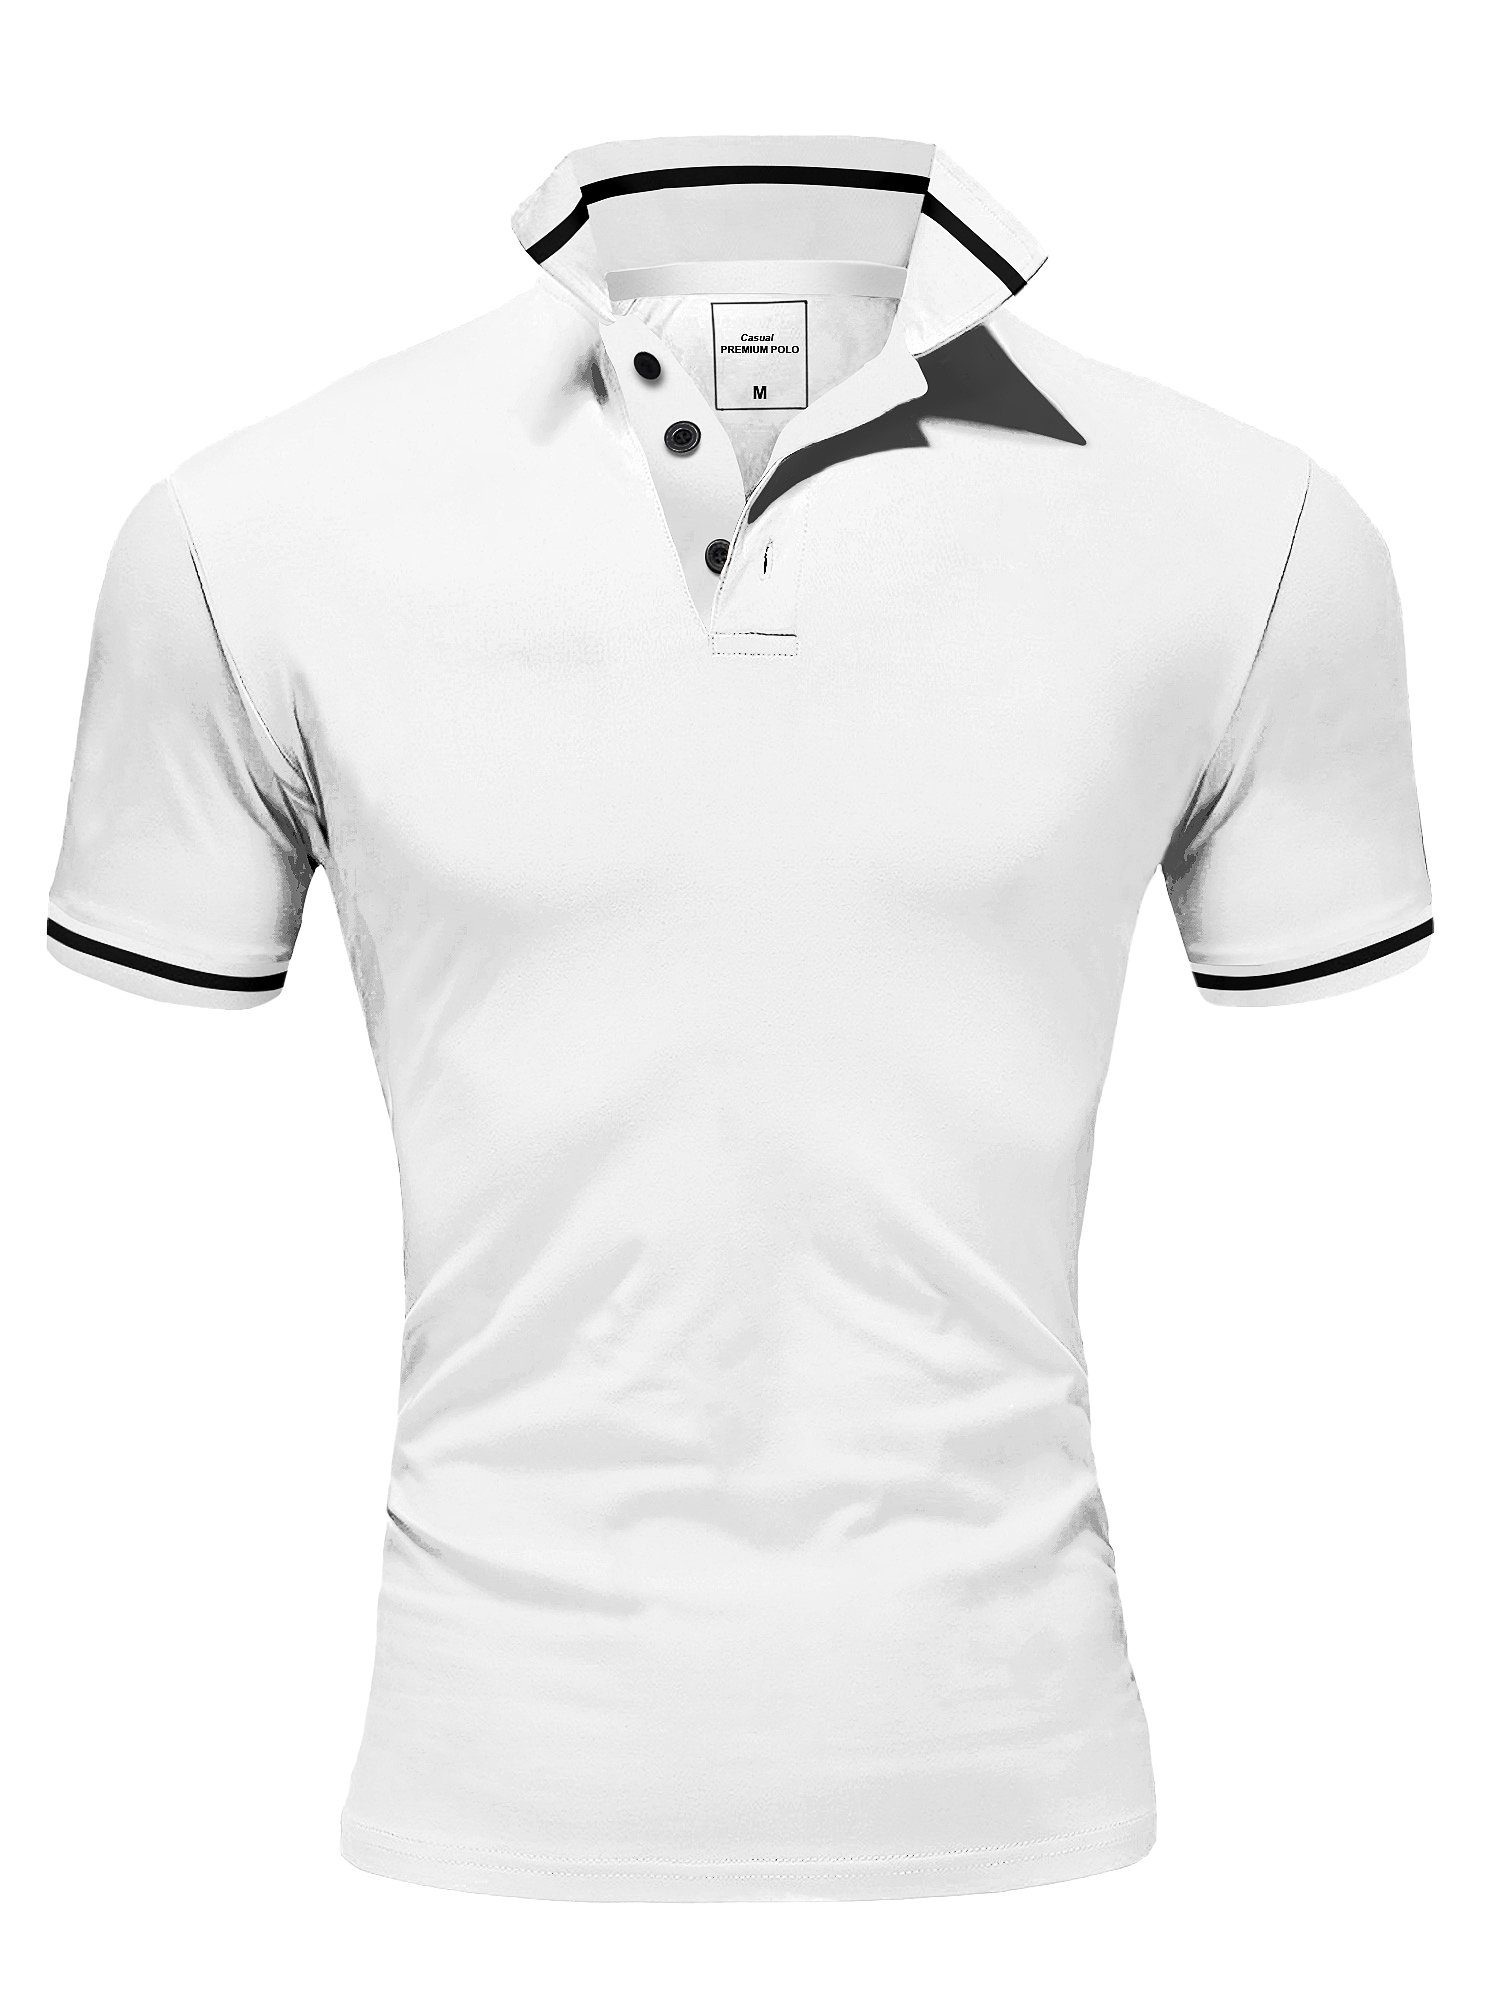 Amaci&Sons Poloshirt PROVIDENCE Herren Basic Kontrast Kurzarm Polohemd T-Shirt Weiß/Schwarz